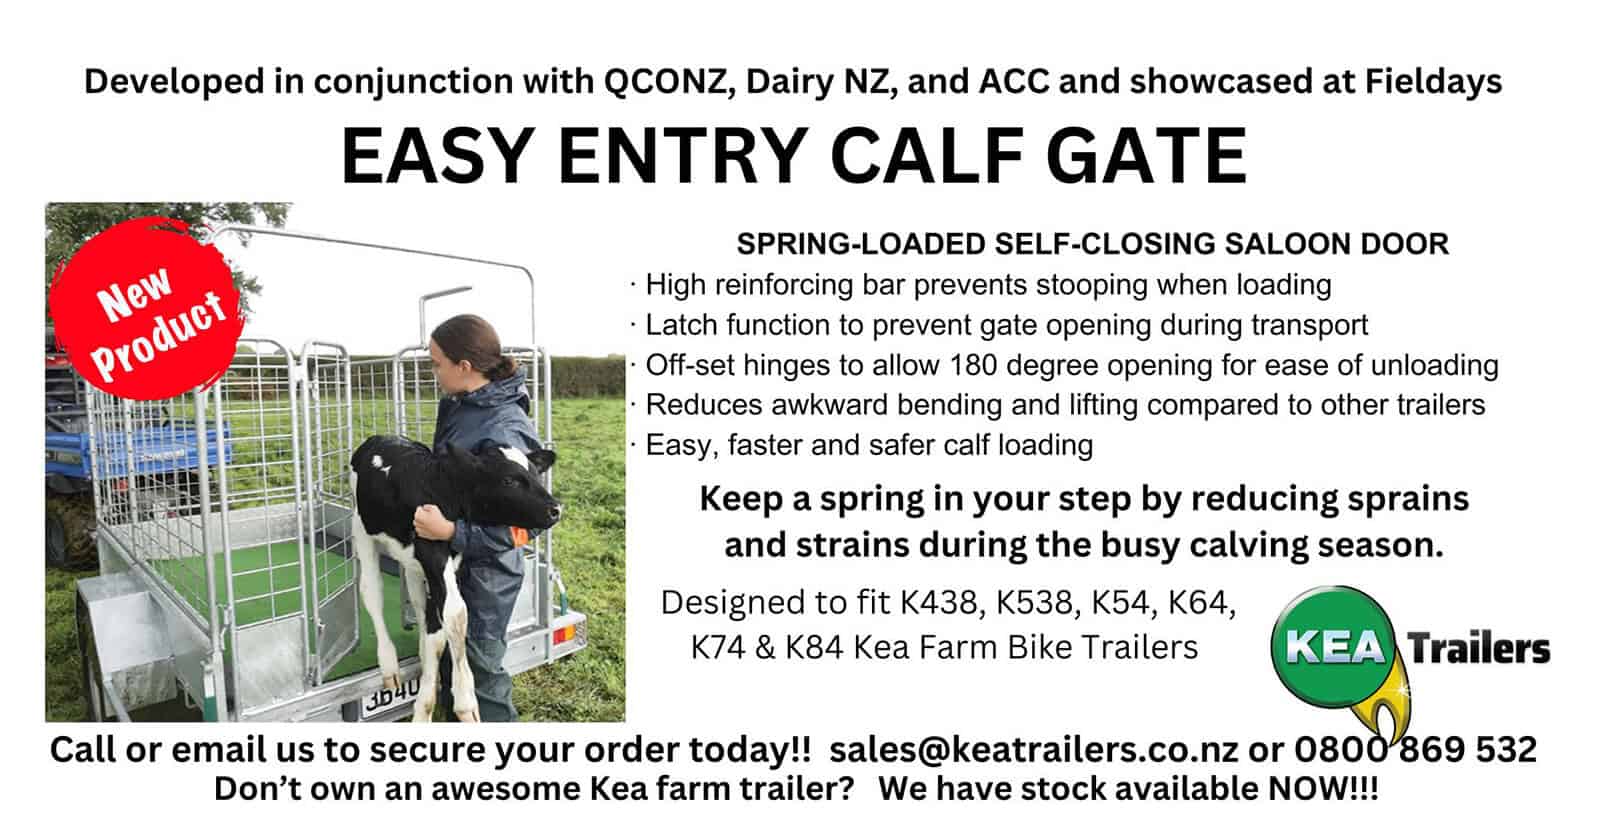 Easy entry calf gate - Kea Trailers